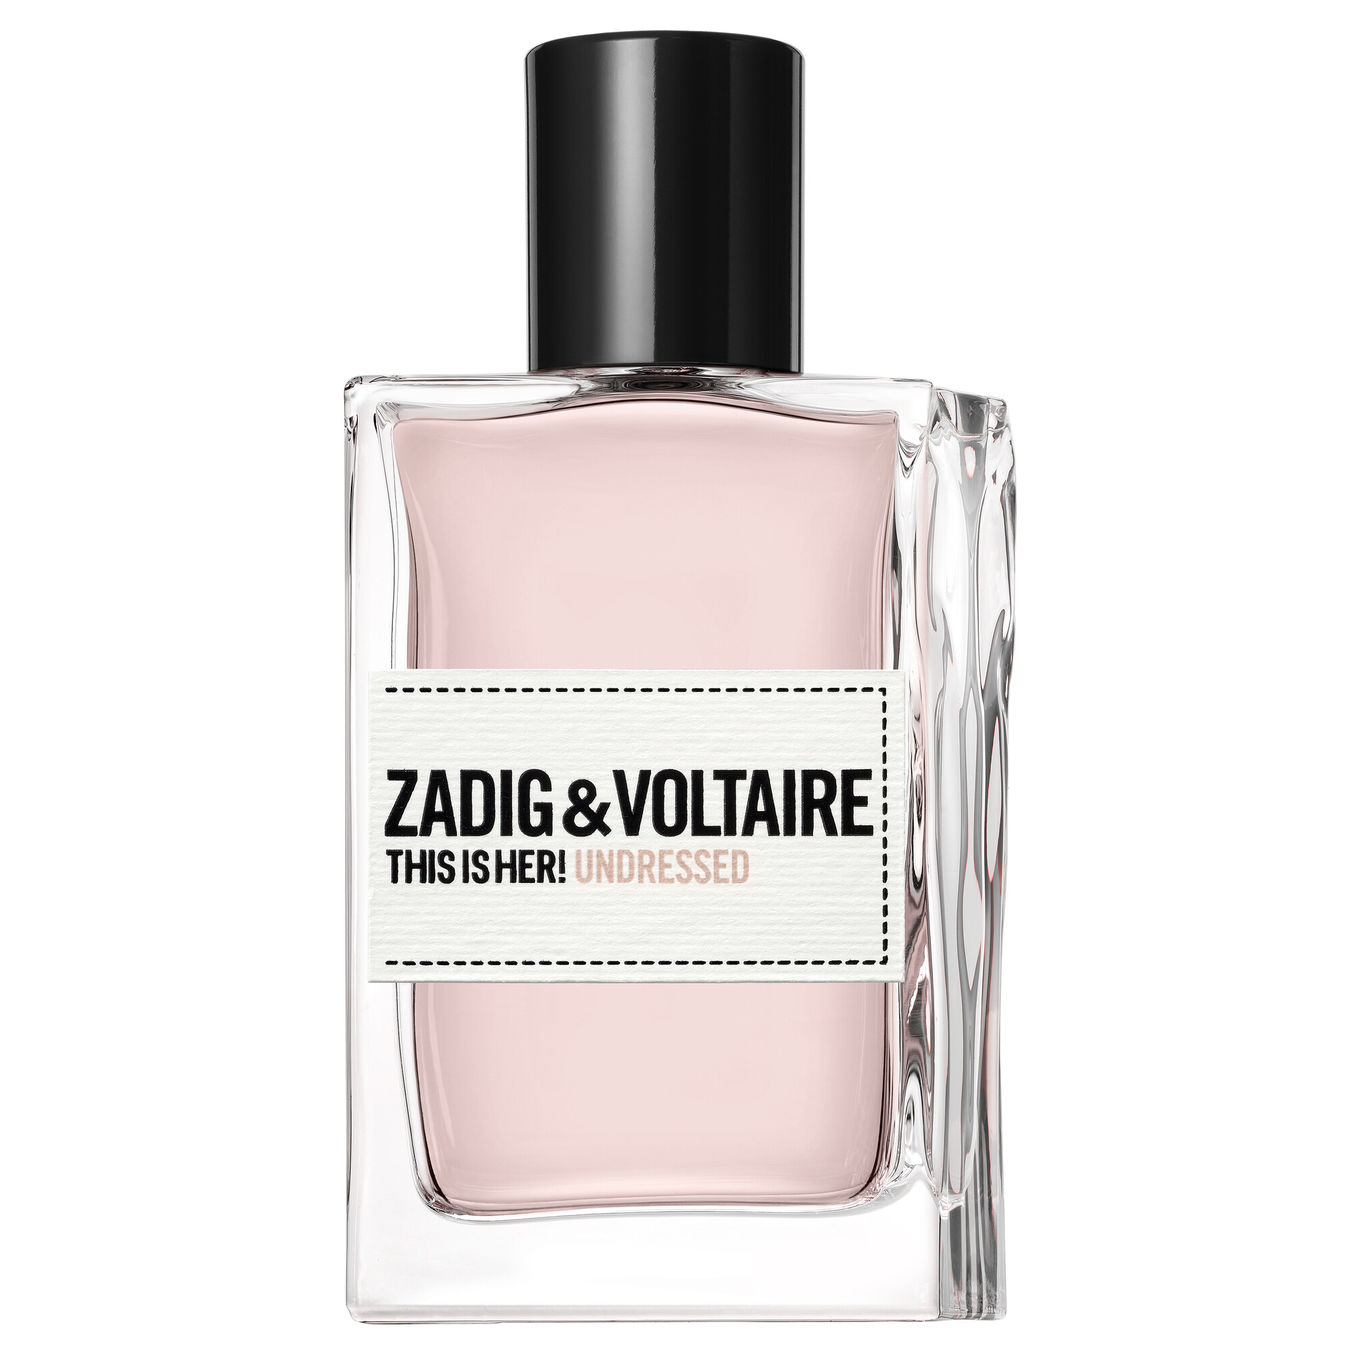 ZADIG&VOLTAIRE This is her! Undressed Eau de Parfum 50ml Damen von Zadig&voltaire